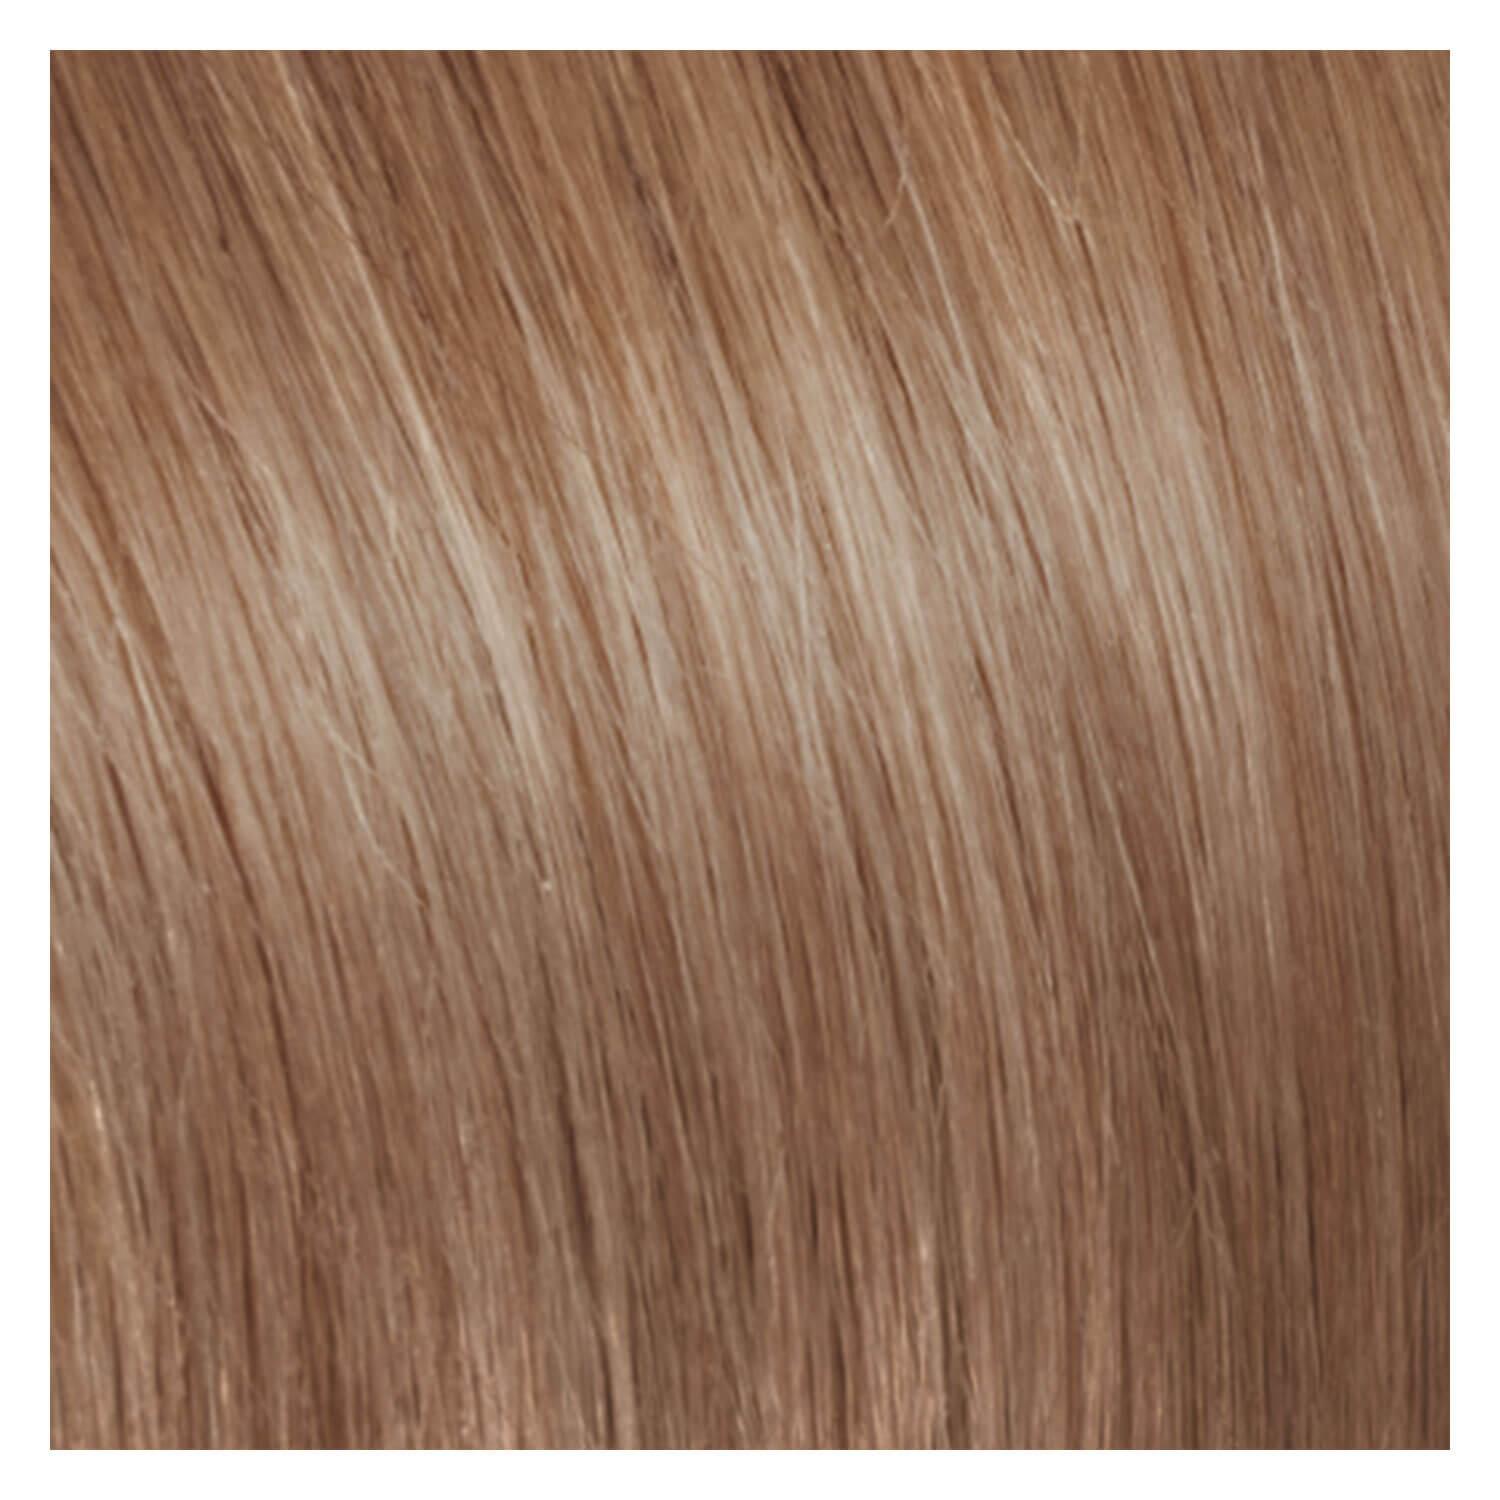 SHE Bonding-System Hair Extensions Straight - 27 Mittel Goldblond  55/60cm